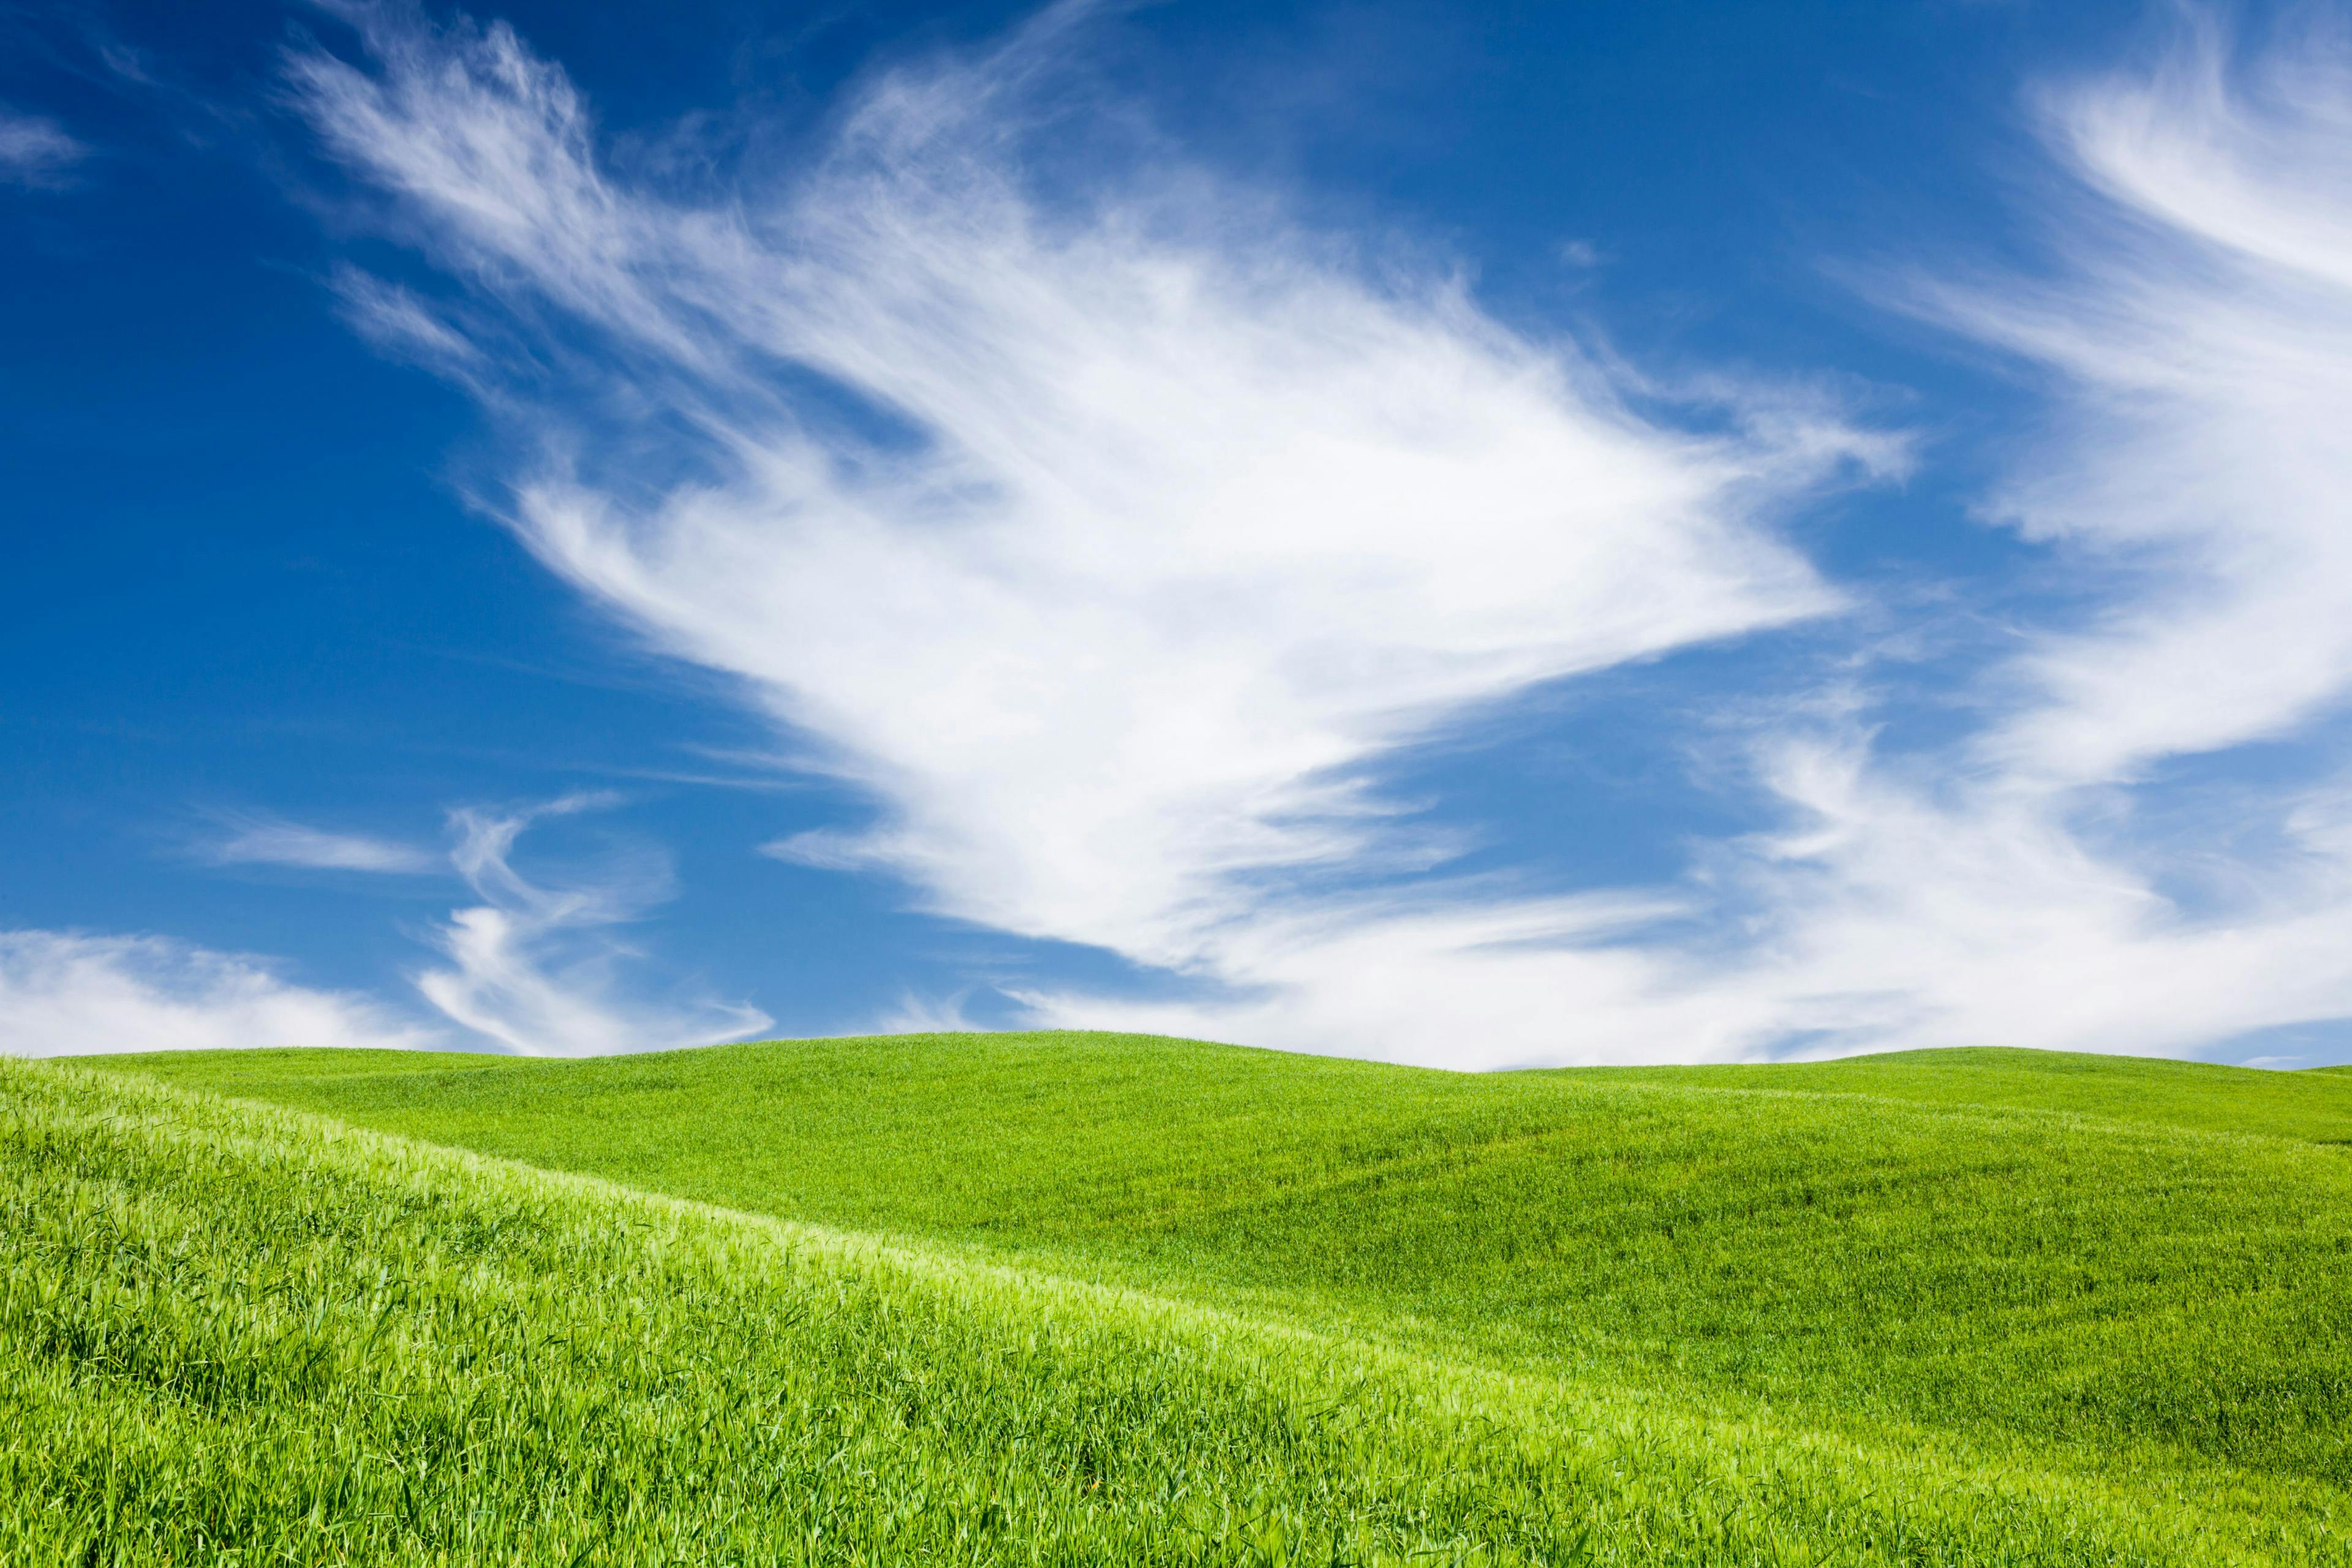 A grassy hill below a bright blue sky with clouds